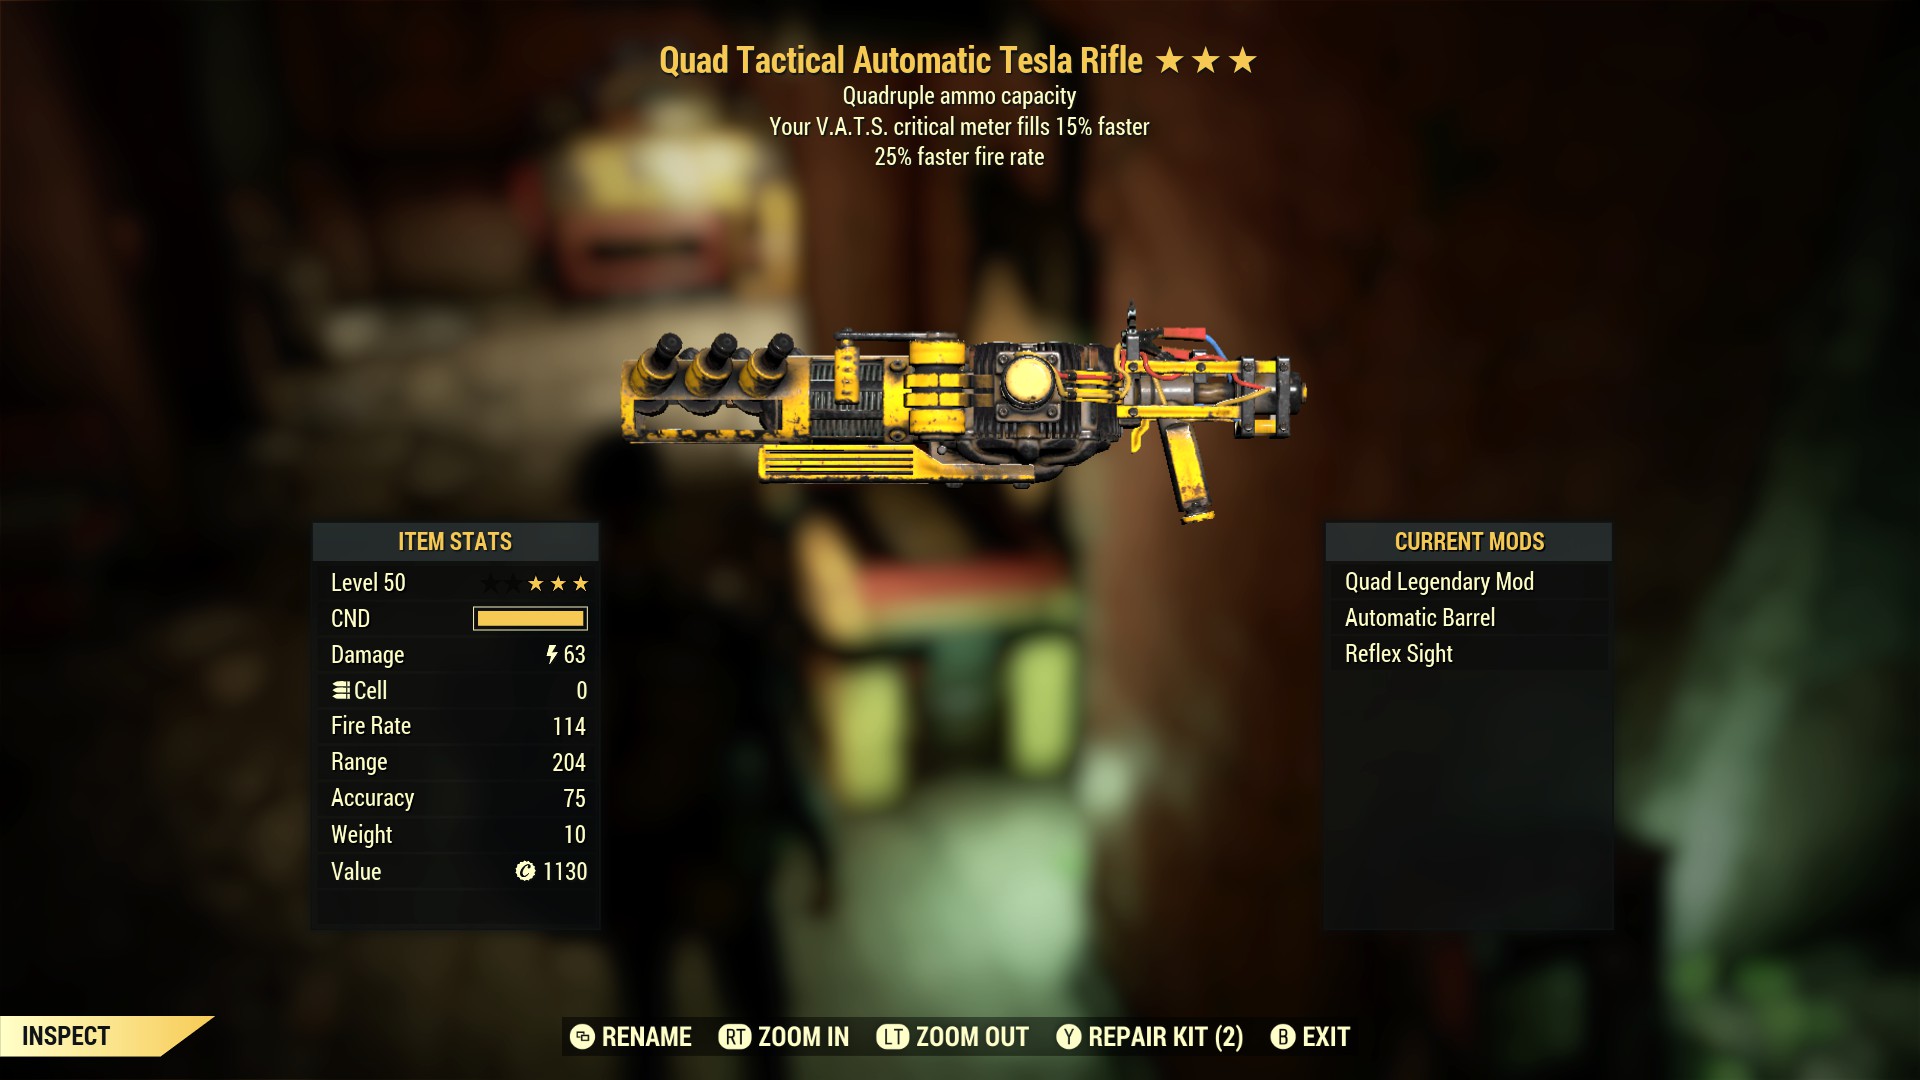 Quad Tactical Automatic Tesla Rifle